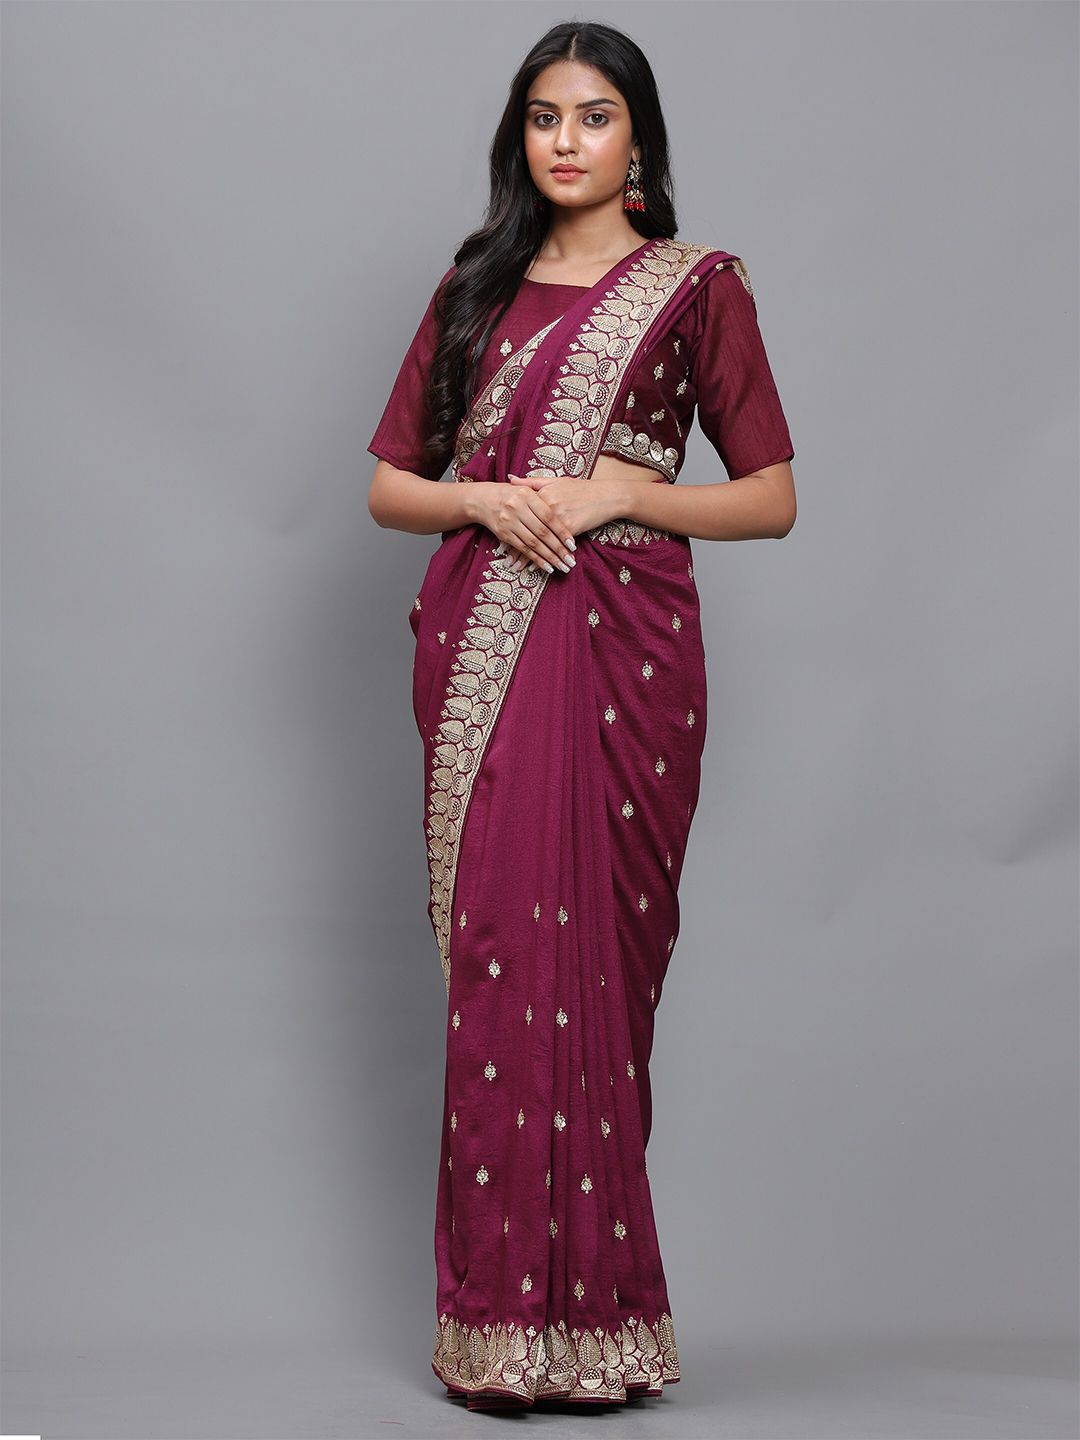 3BUDDY FASHION Magenta & Silver-Toned Woven Design Zari Jute Silk Venkatgiri Saree Price in India